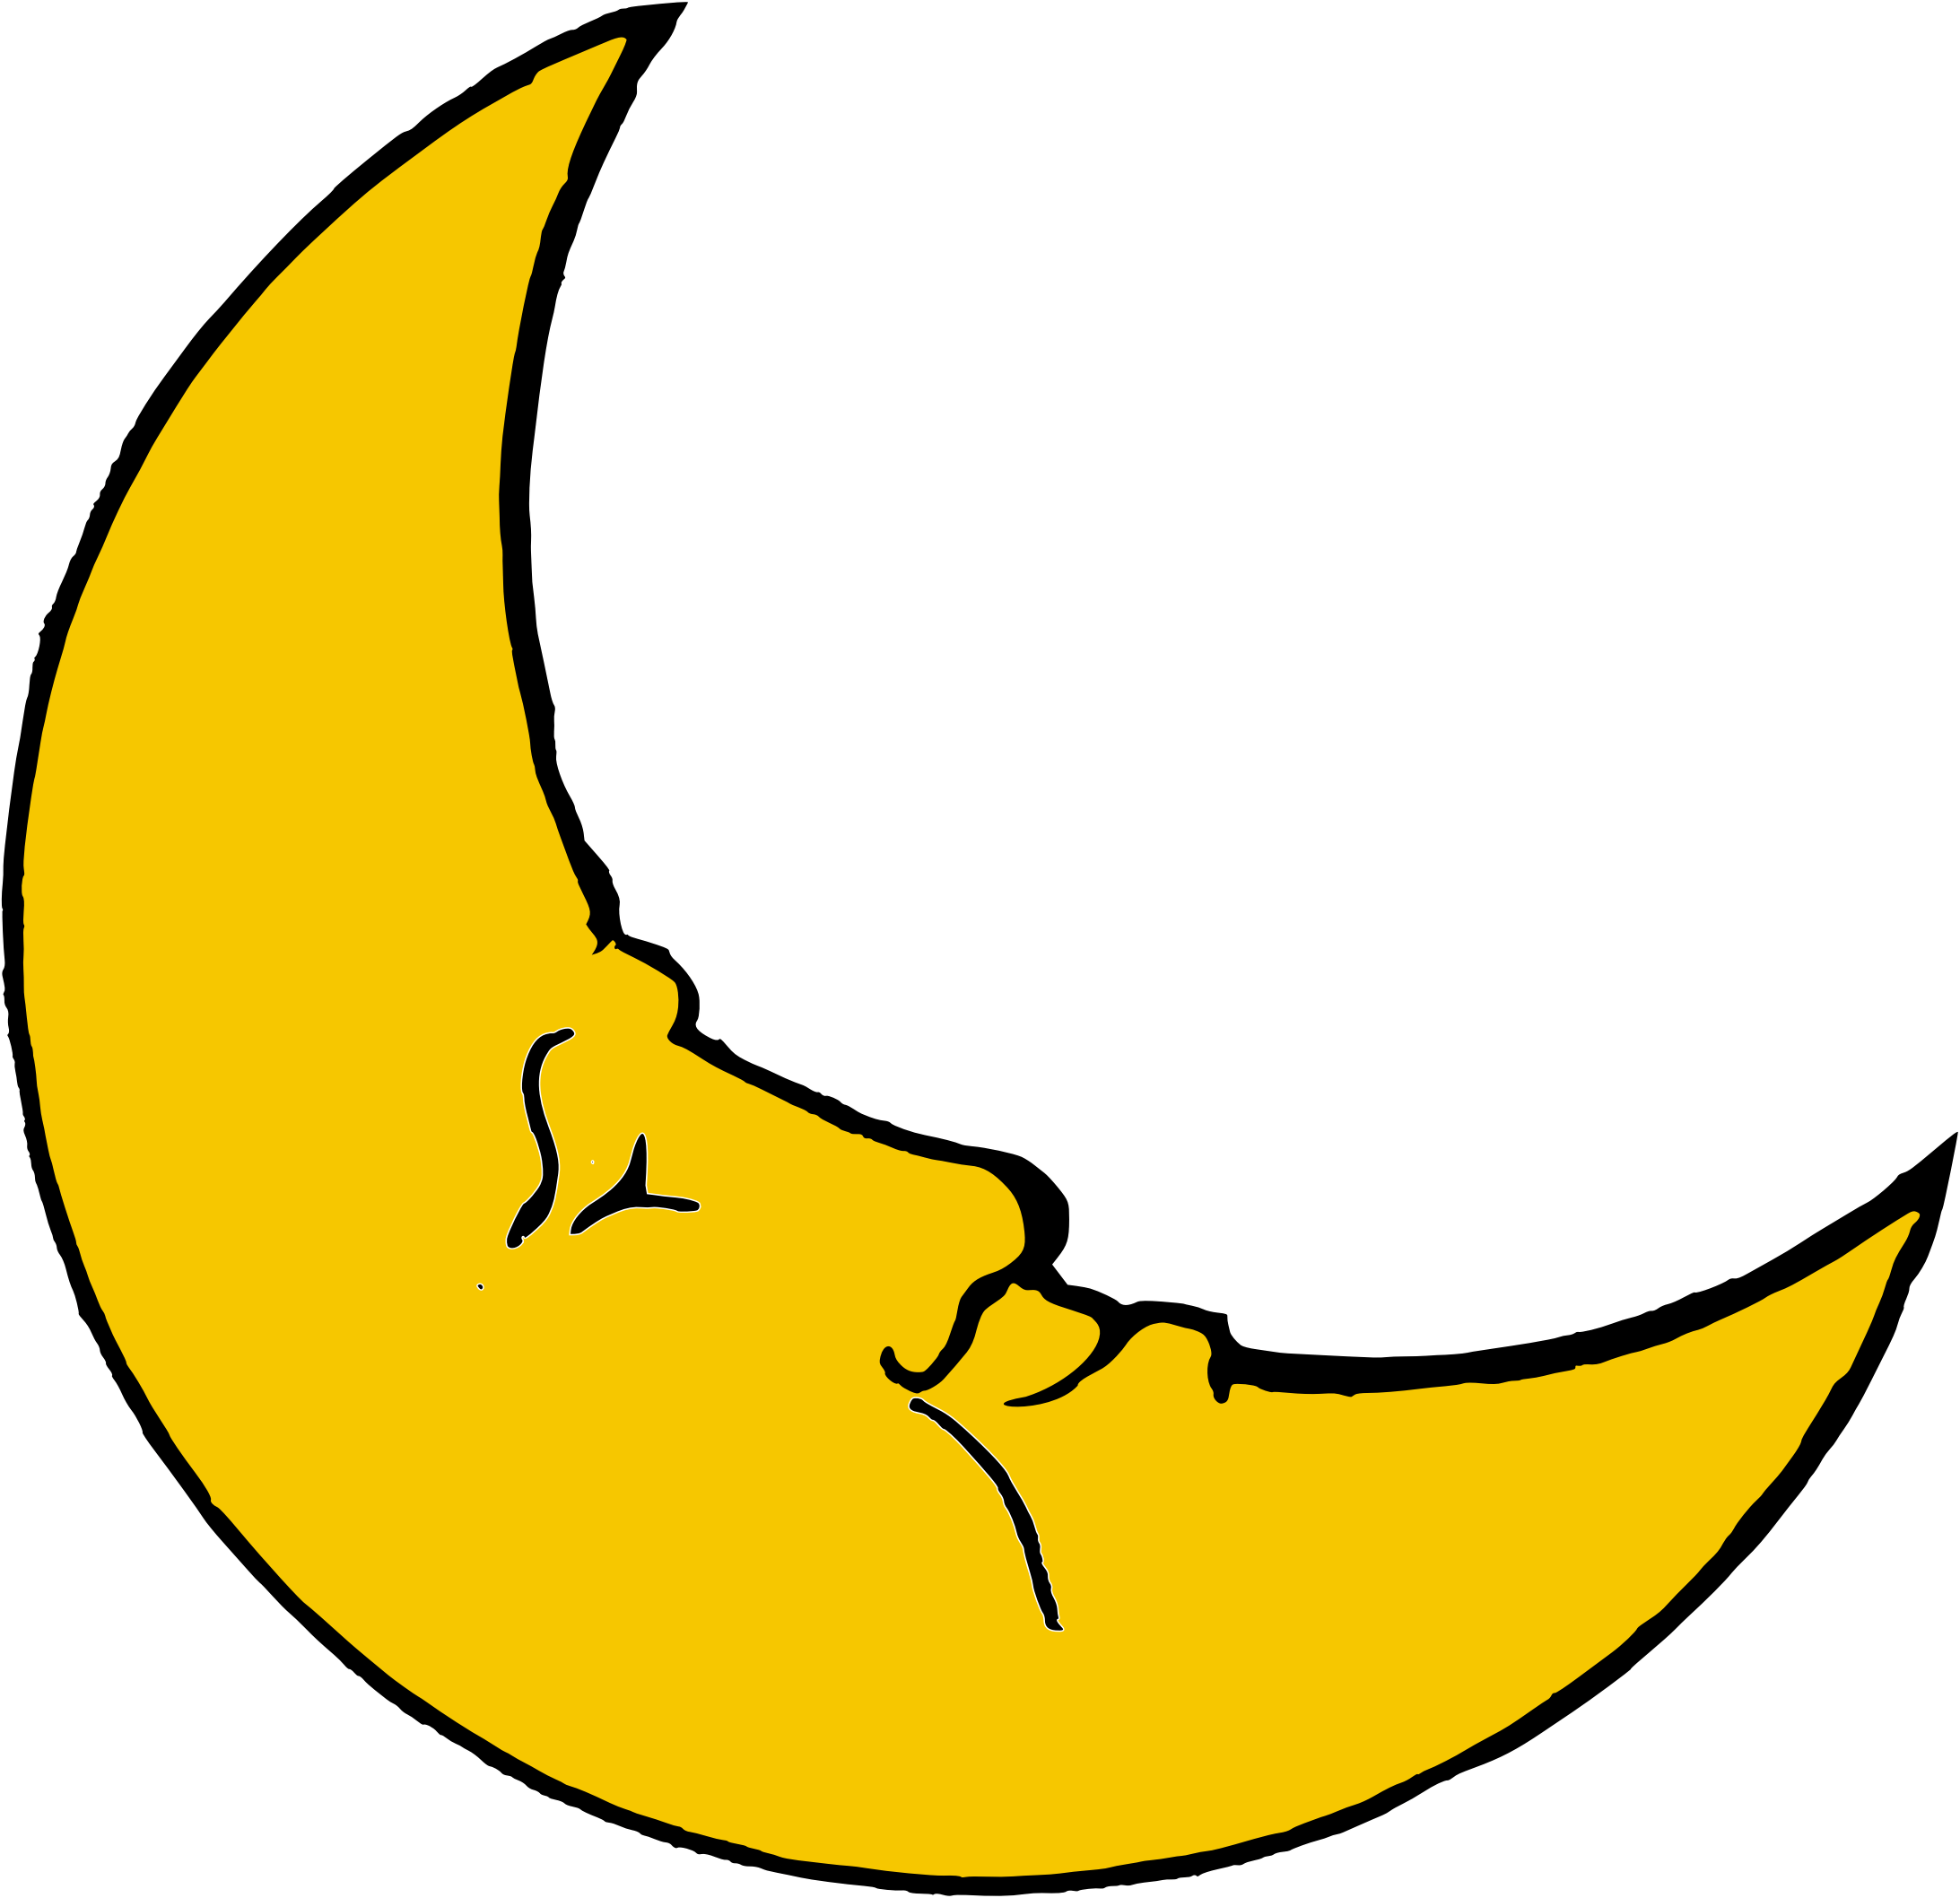 Golden Crescent Moon Free Download Image PNG Image